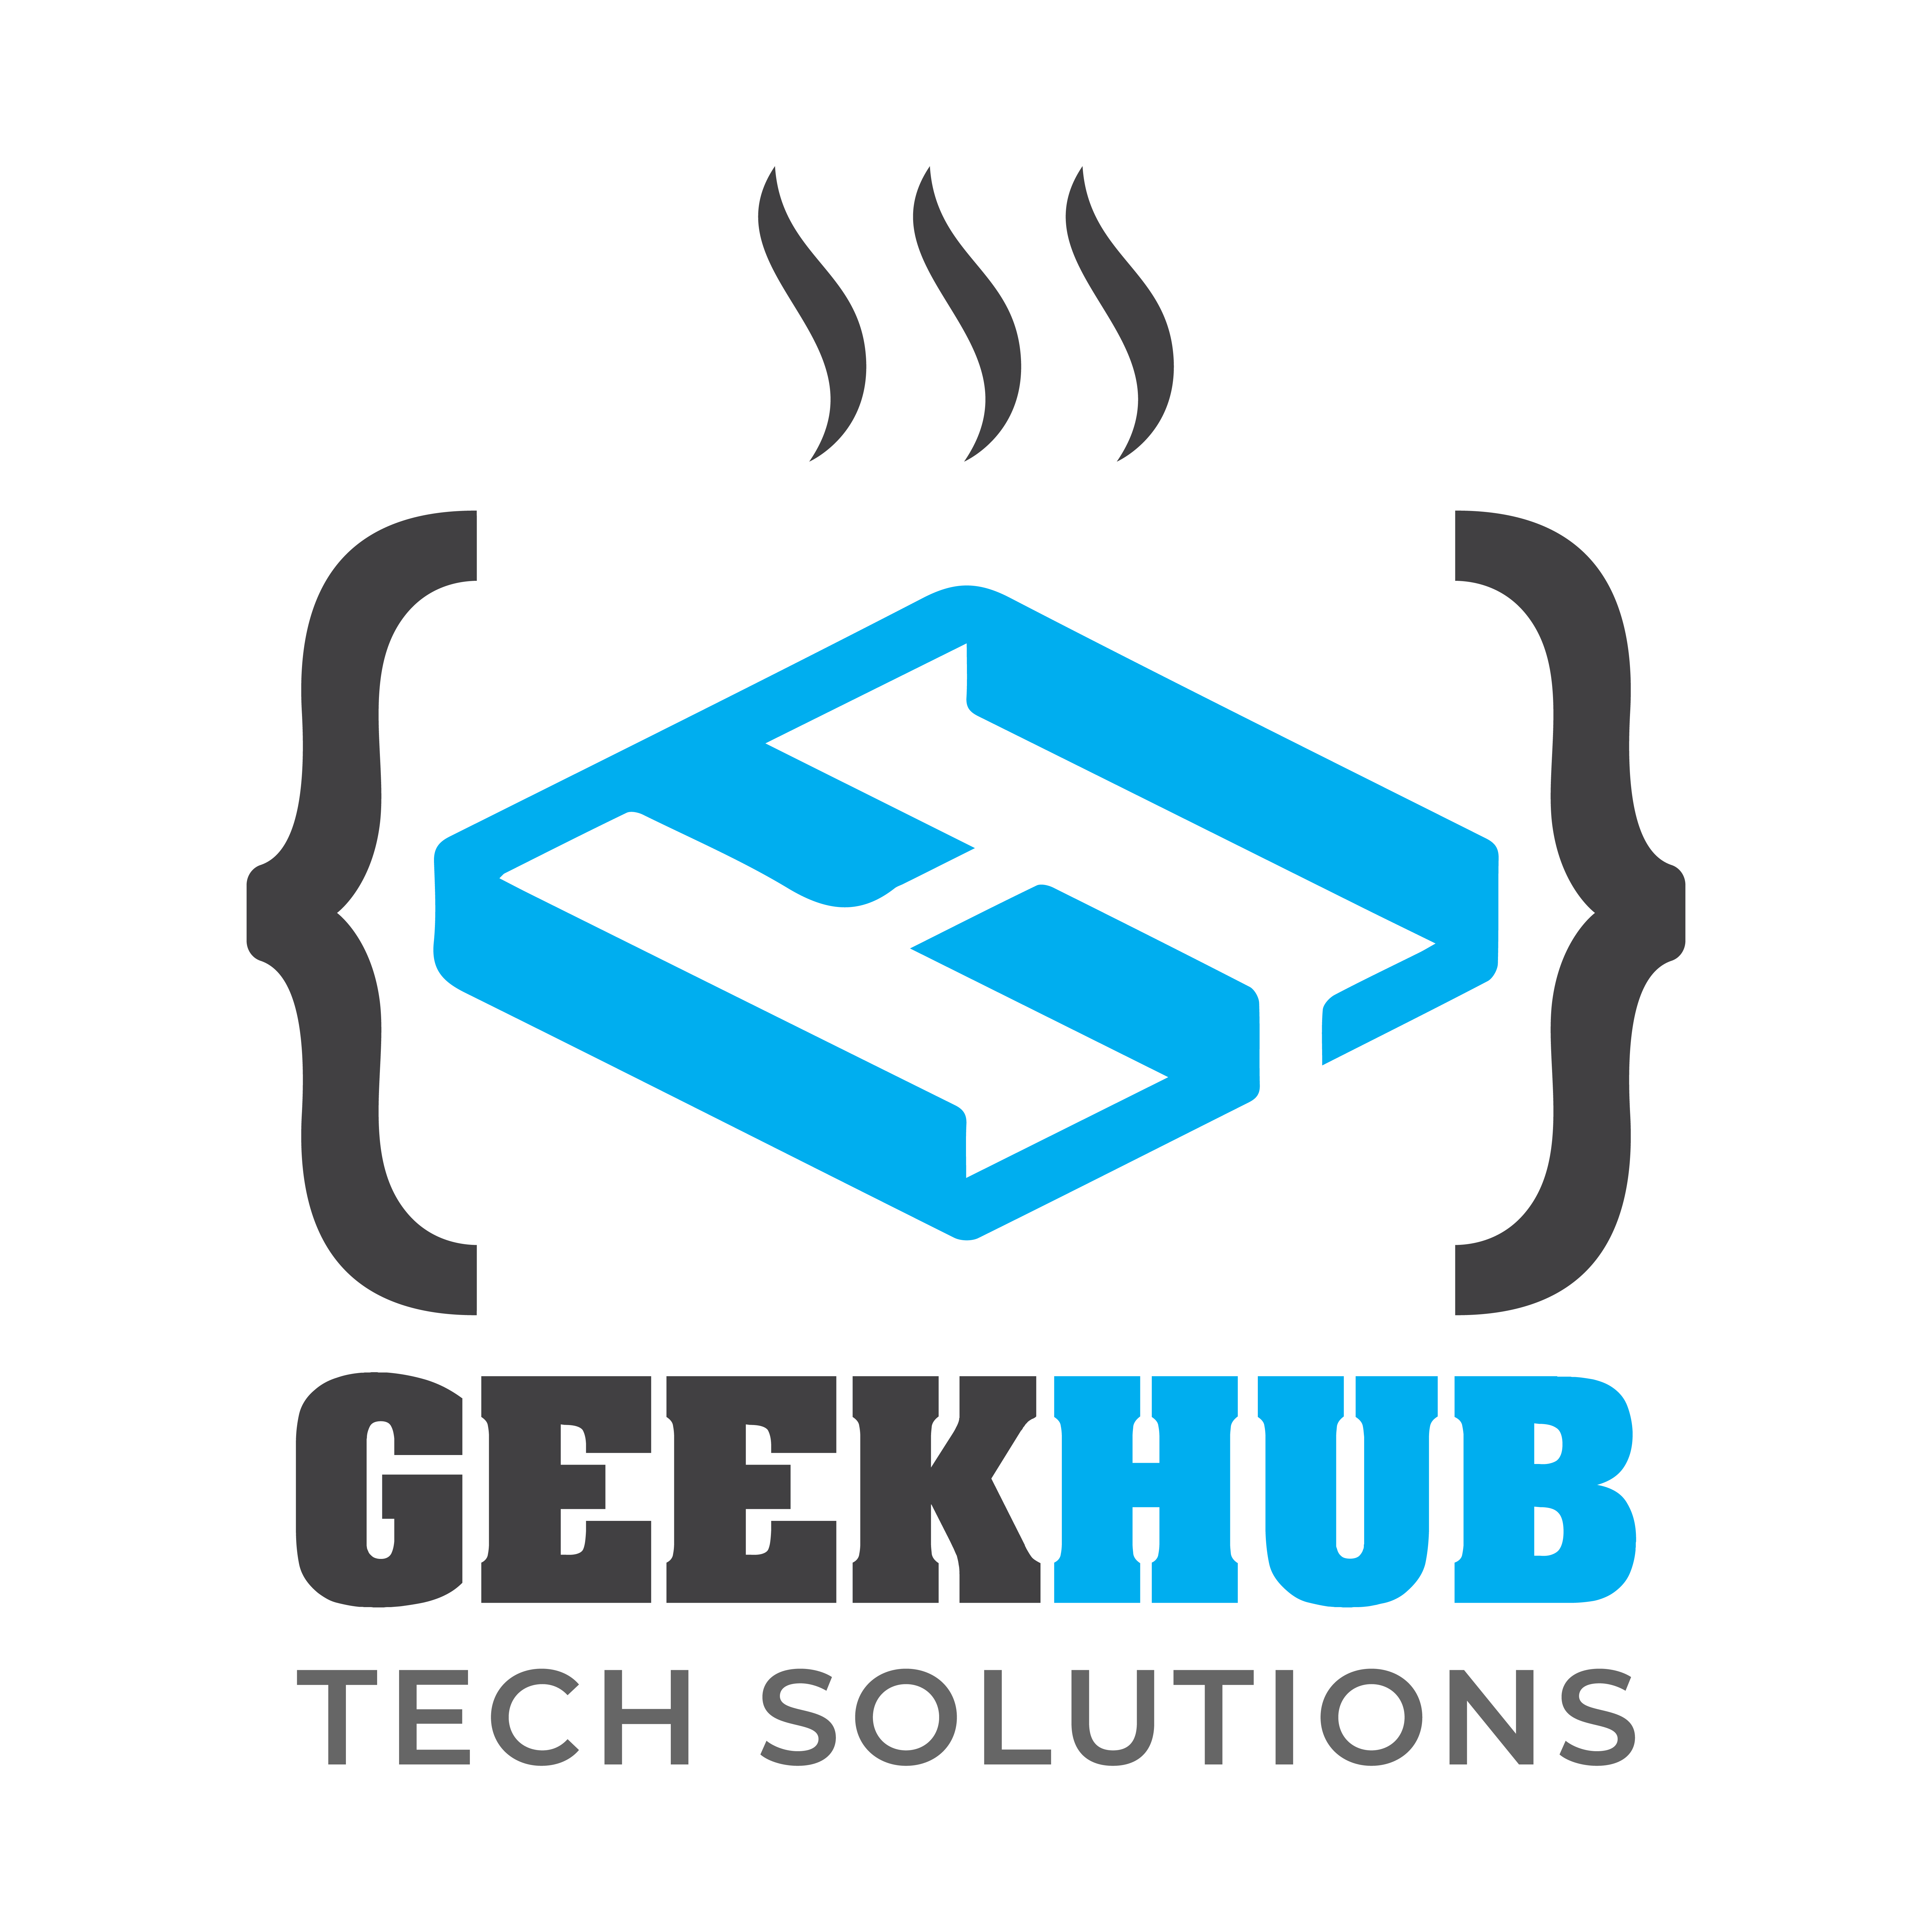 Geekhub Tech Solutions